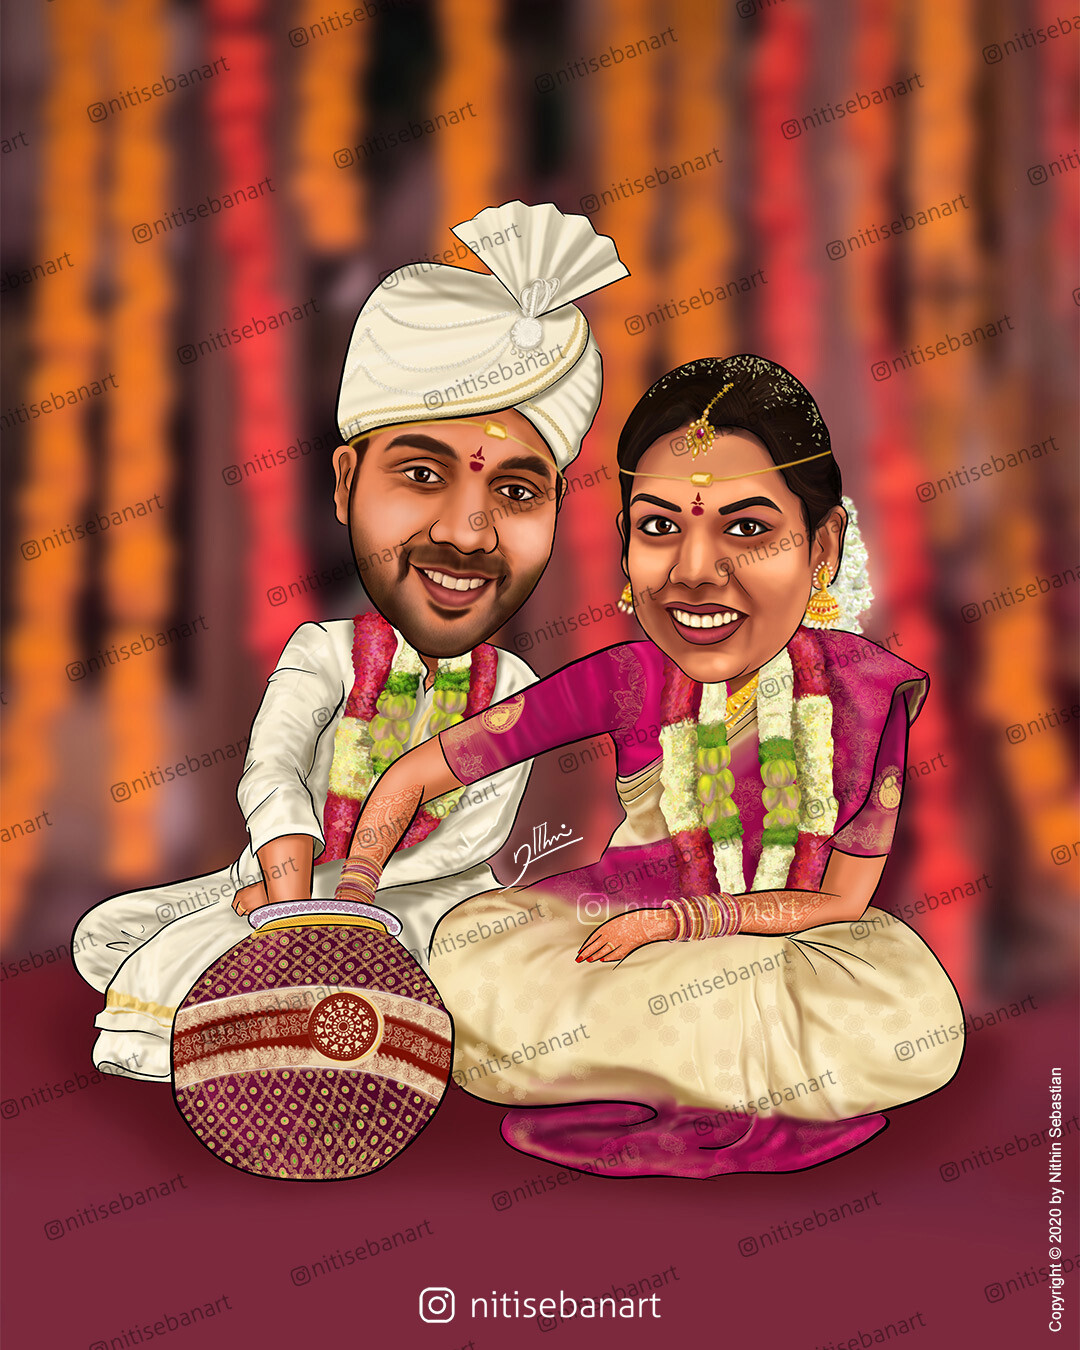 ArtStation - Traditional Telugu wedding caricature